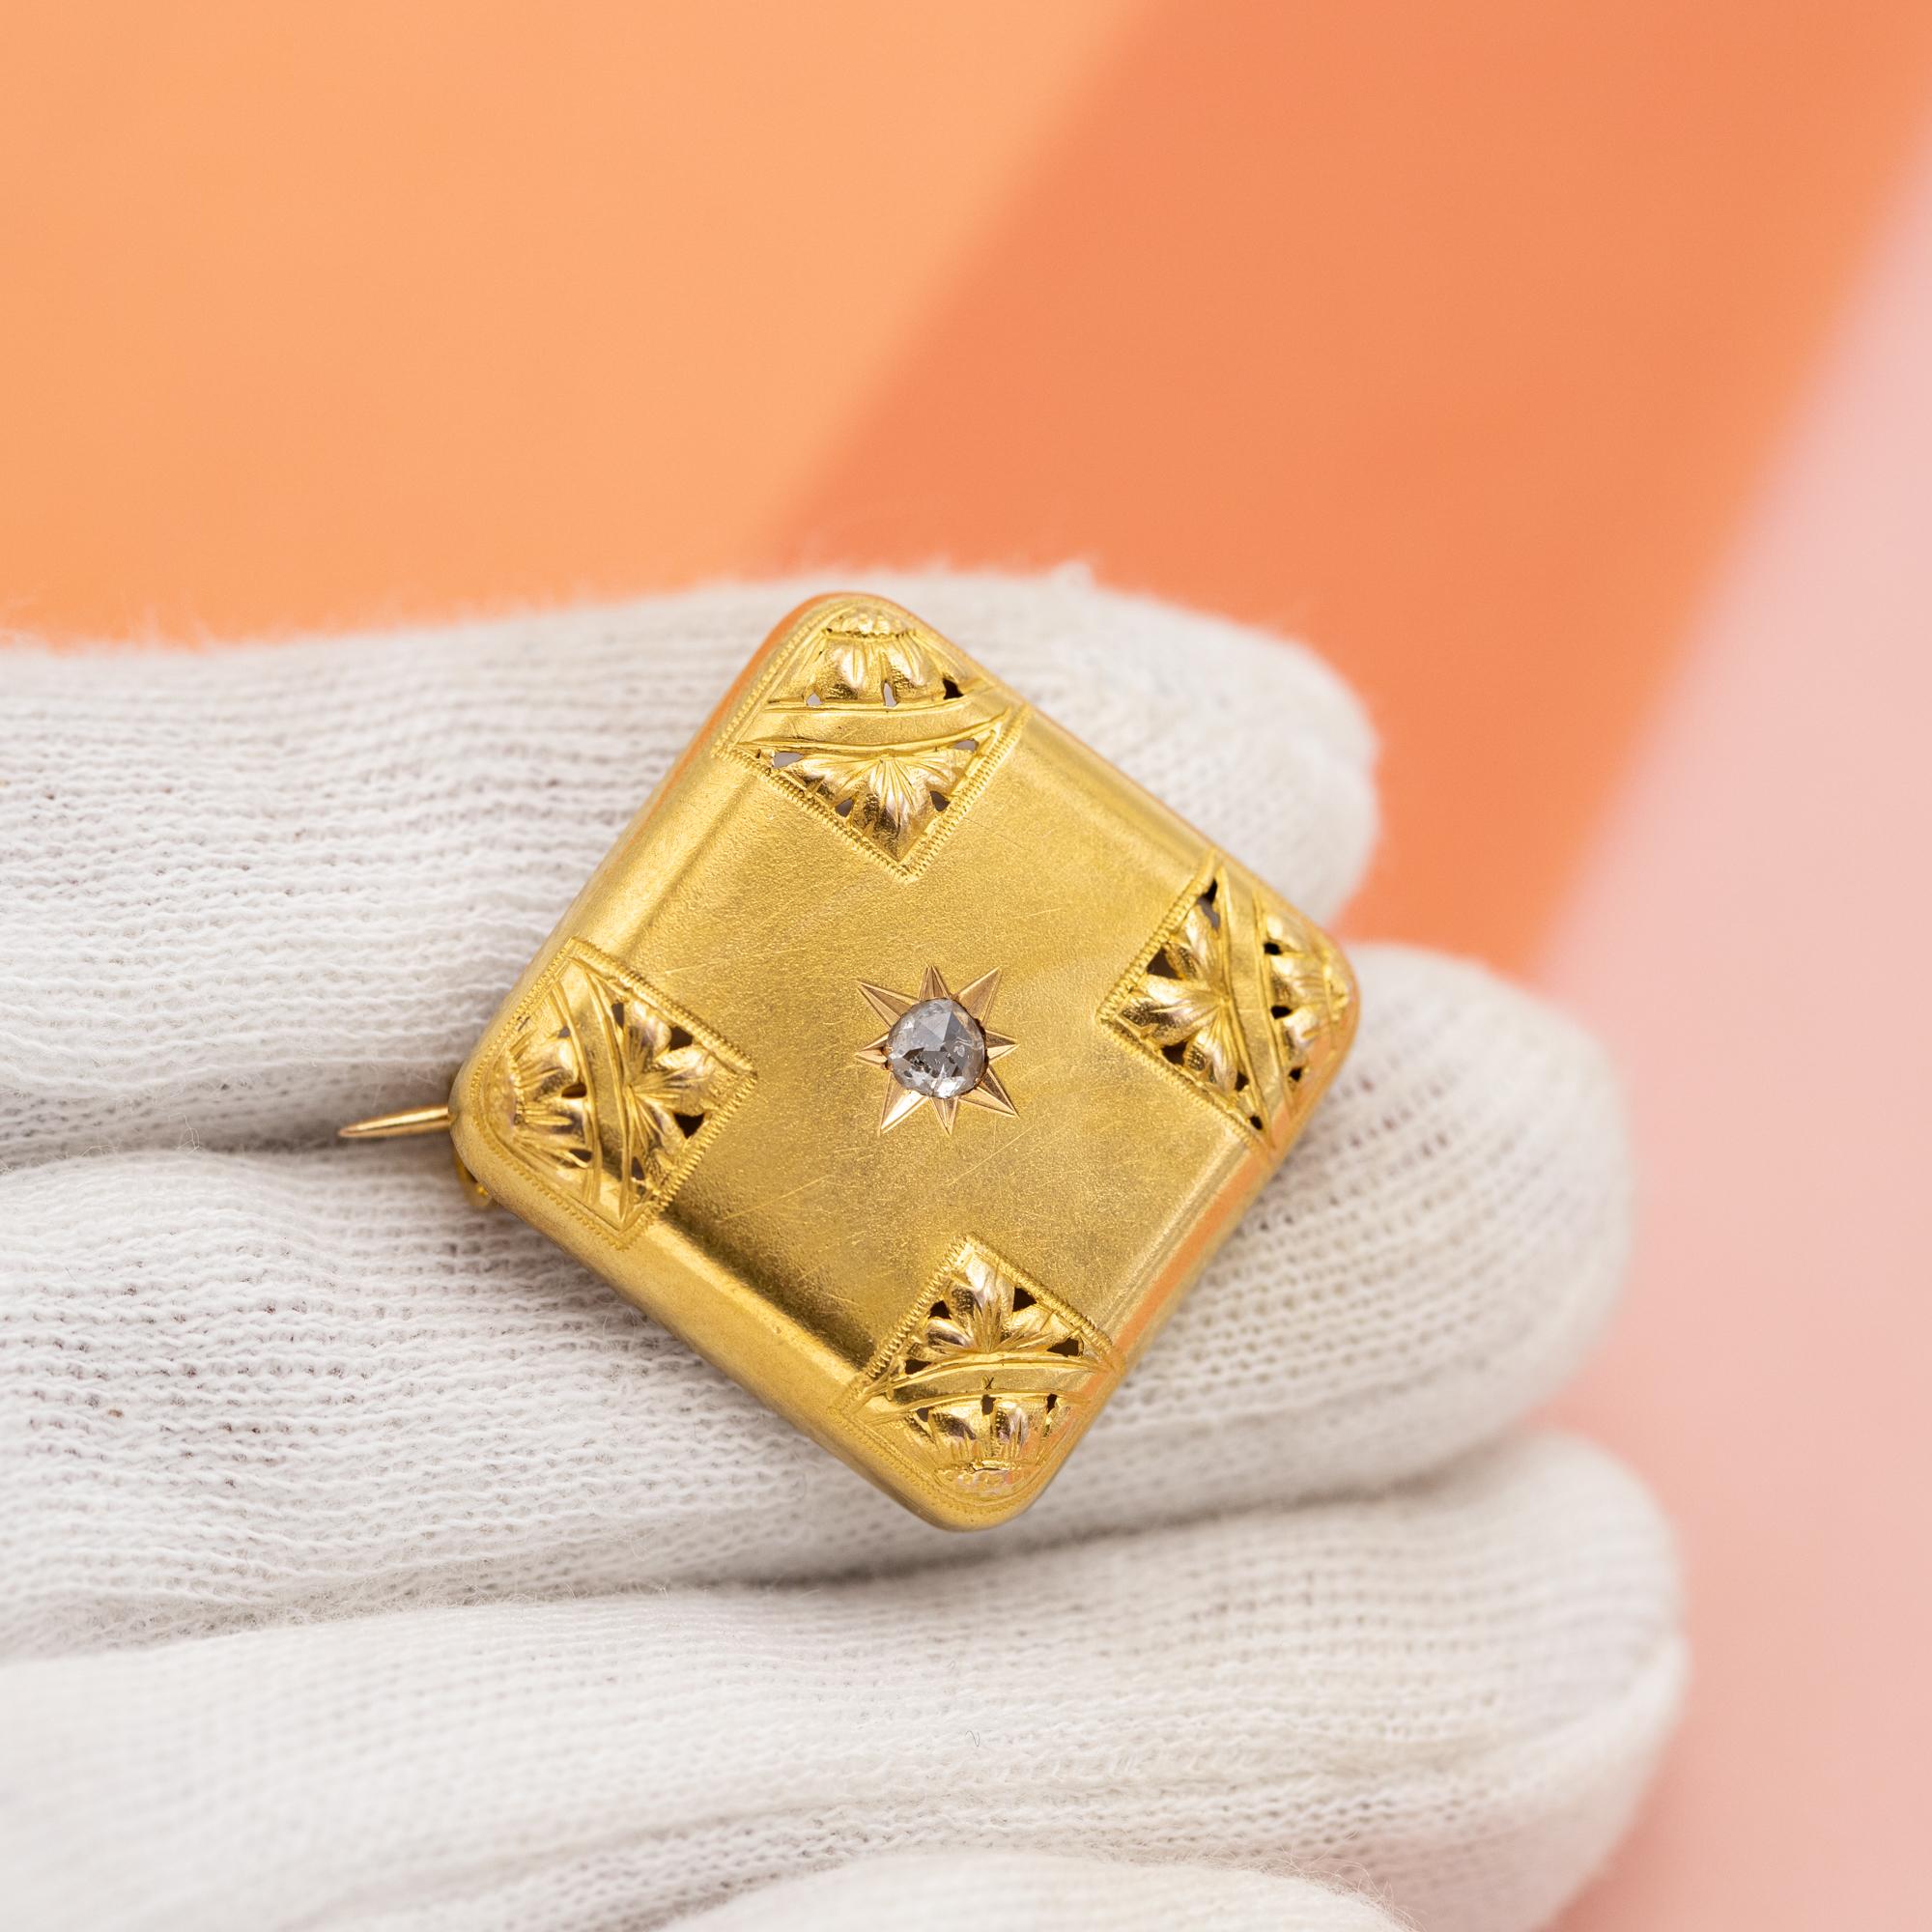 Women's or Men's 18k French Art Nouveau brooch - Late Victorian jewelry - diamond Floral brooch